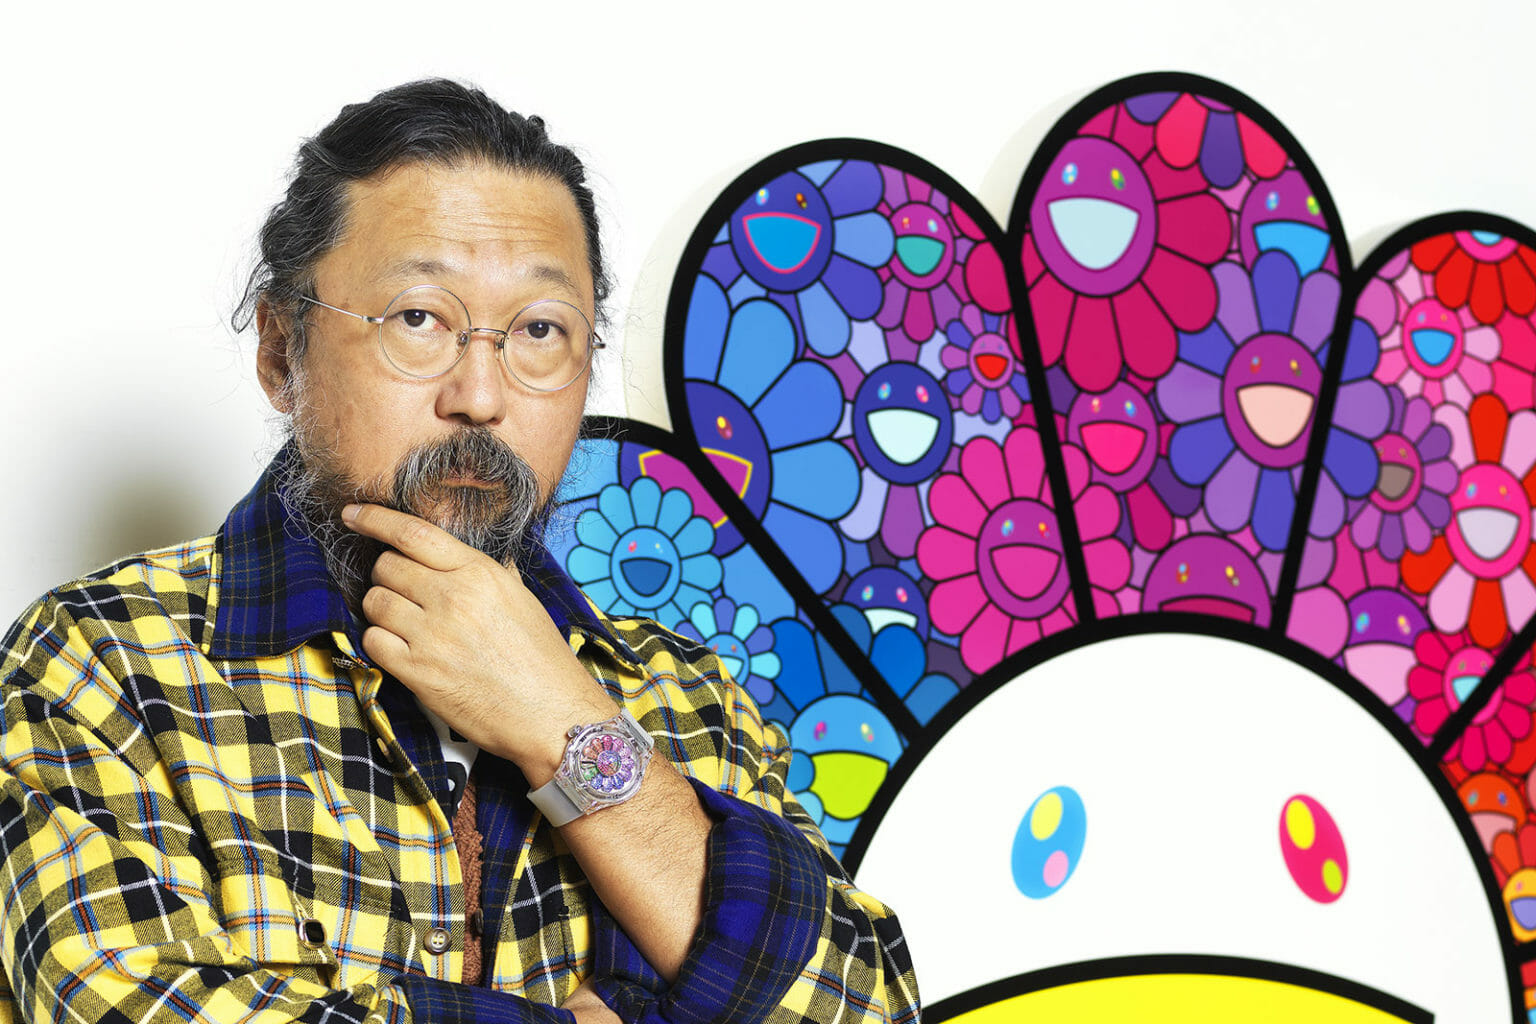 Hublot ambassador and art icon Takashi Murakami continues to build